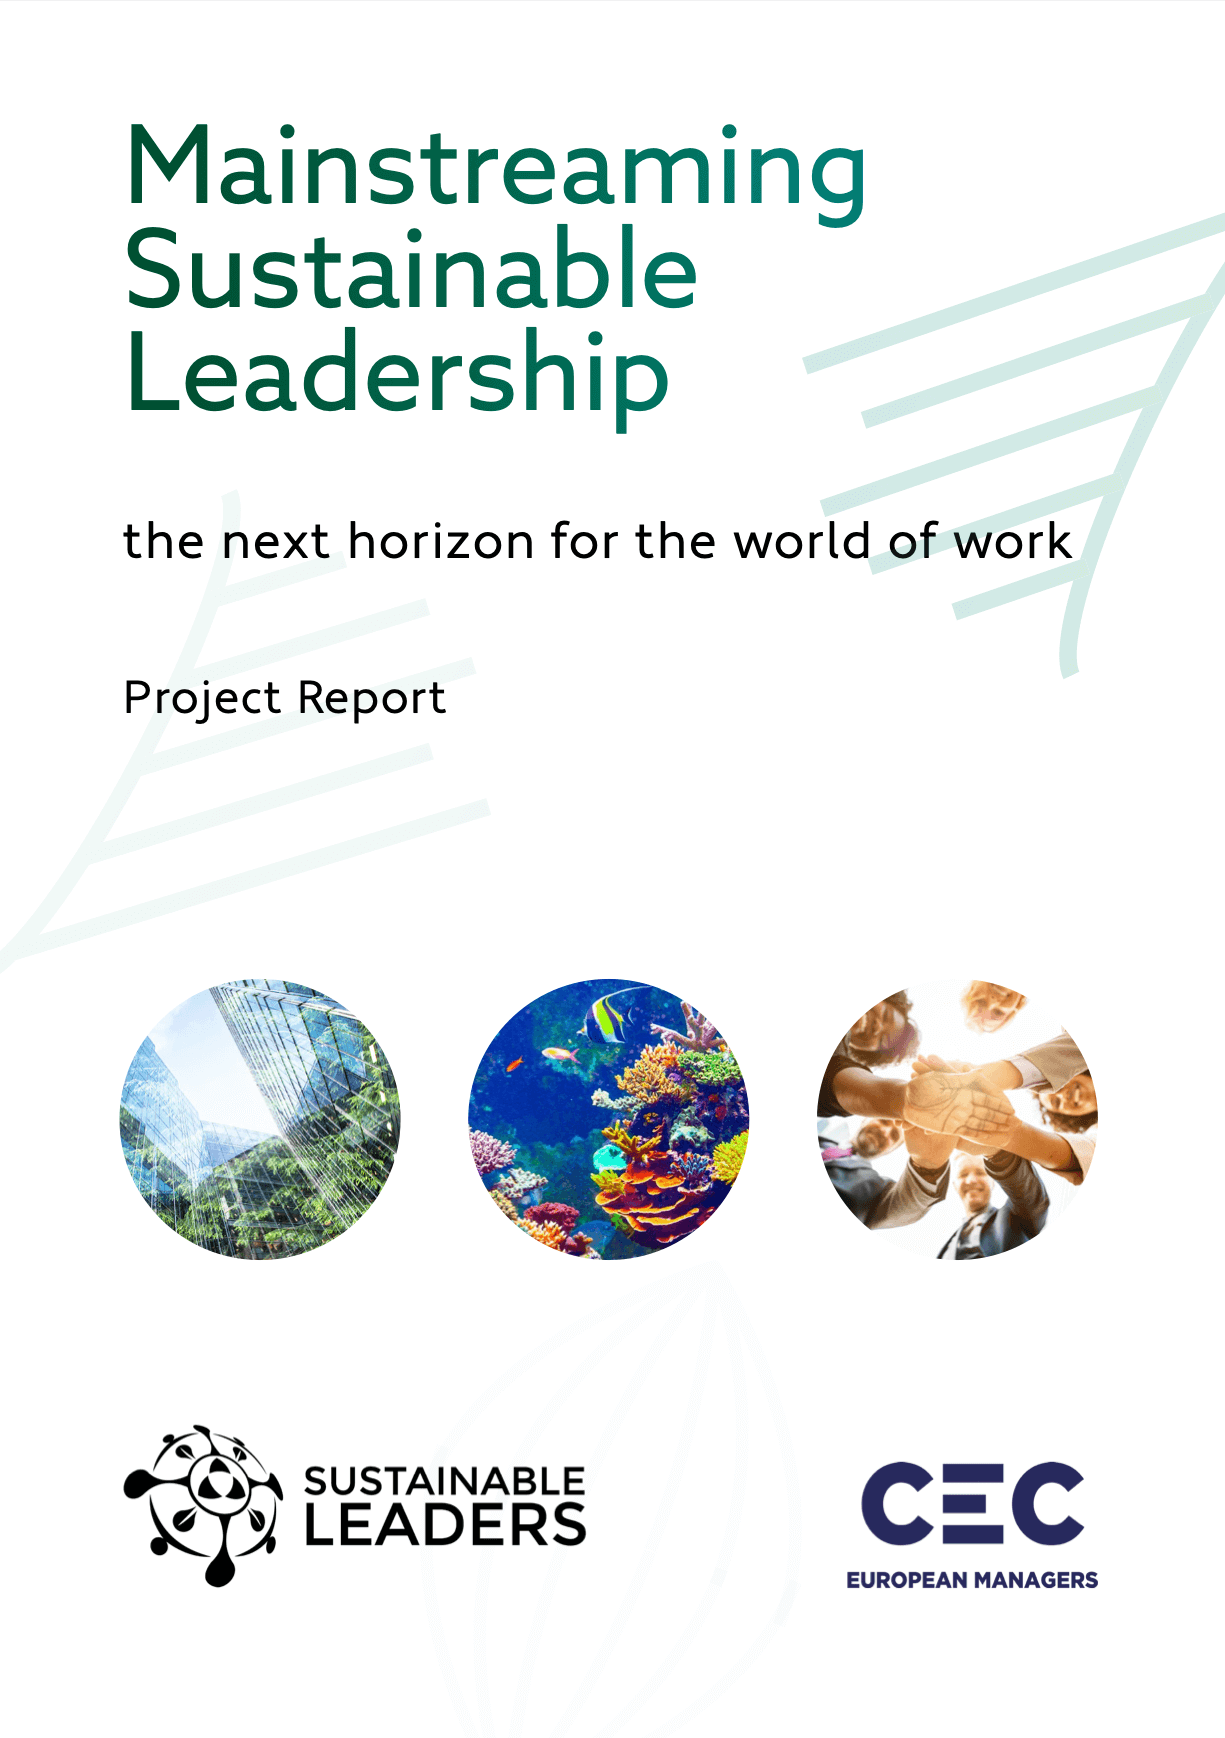 Sustainable Leadership - LinkedIn CEC European Managers